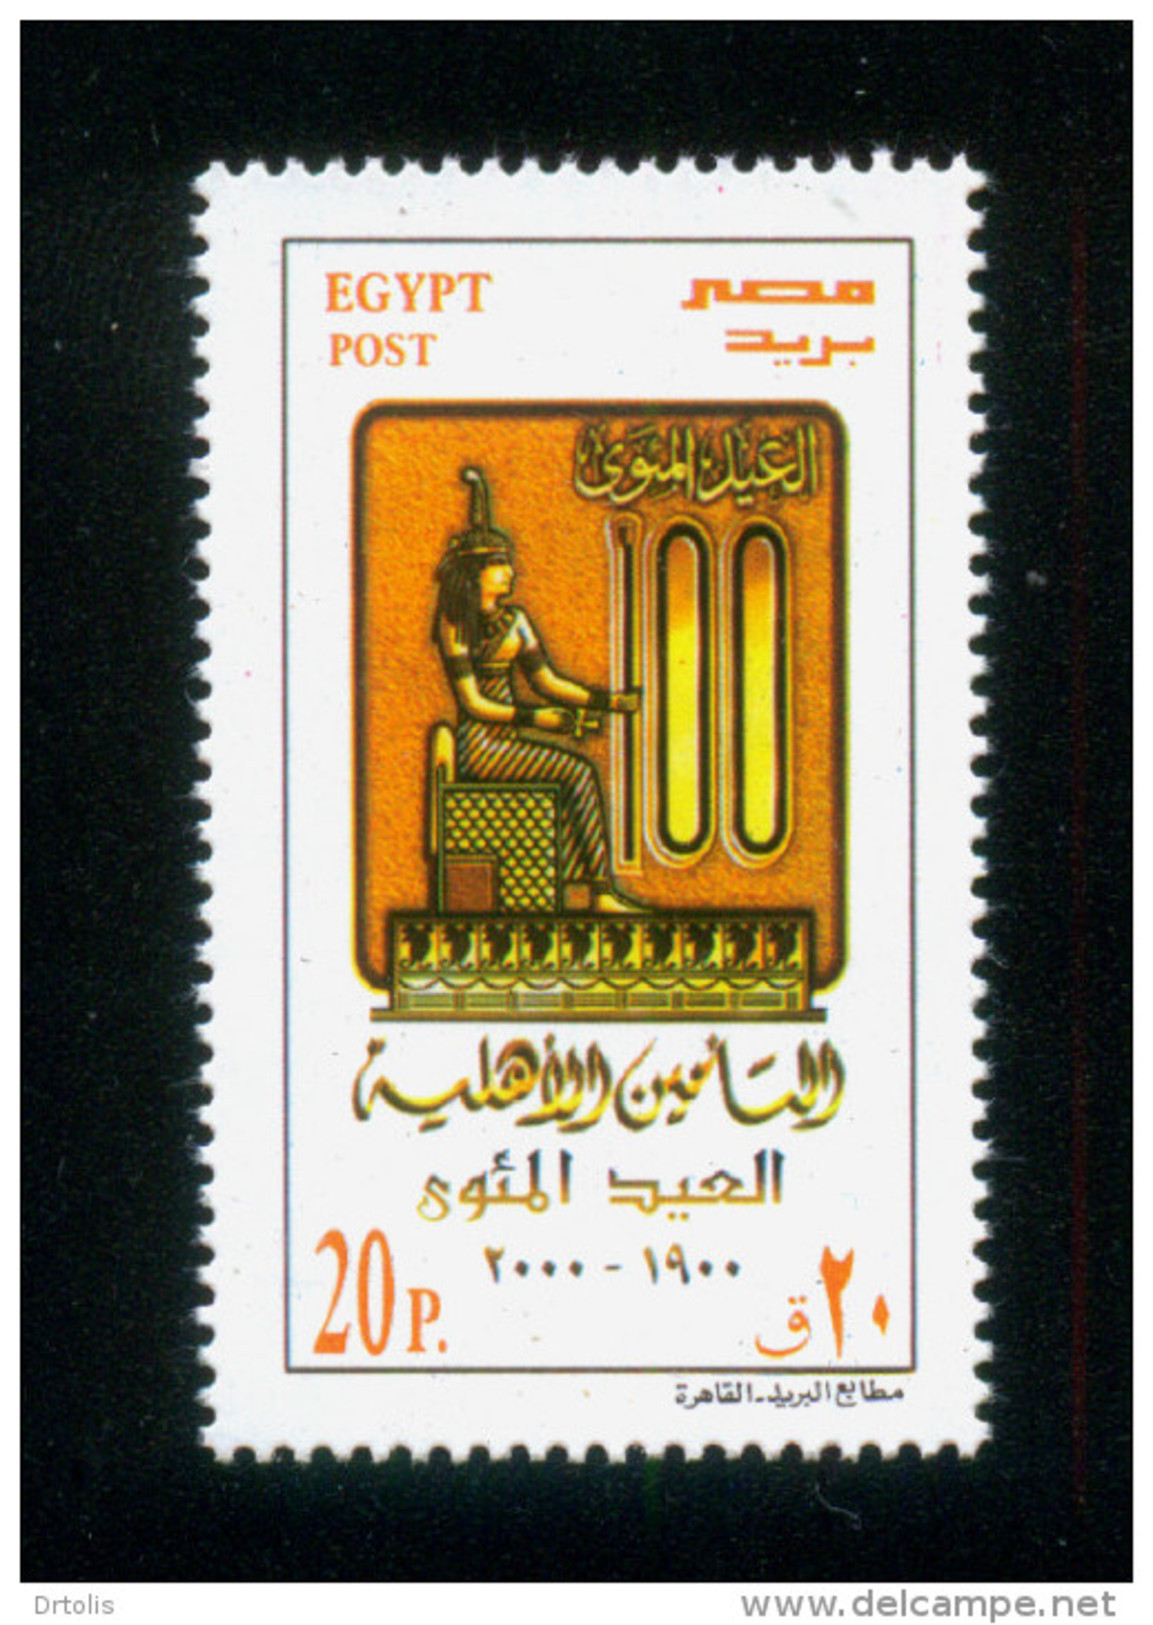 EGYPT / 2000 / NATIONAL INSURANCE COMPANY / MAAT / EGYPTOLOGY / JUSTICE & TRUTH / MNH / VF - Ungebraucht